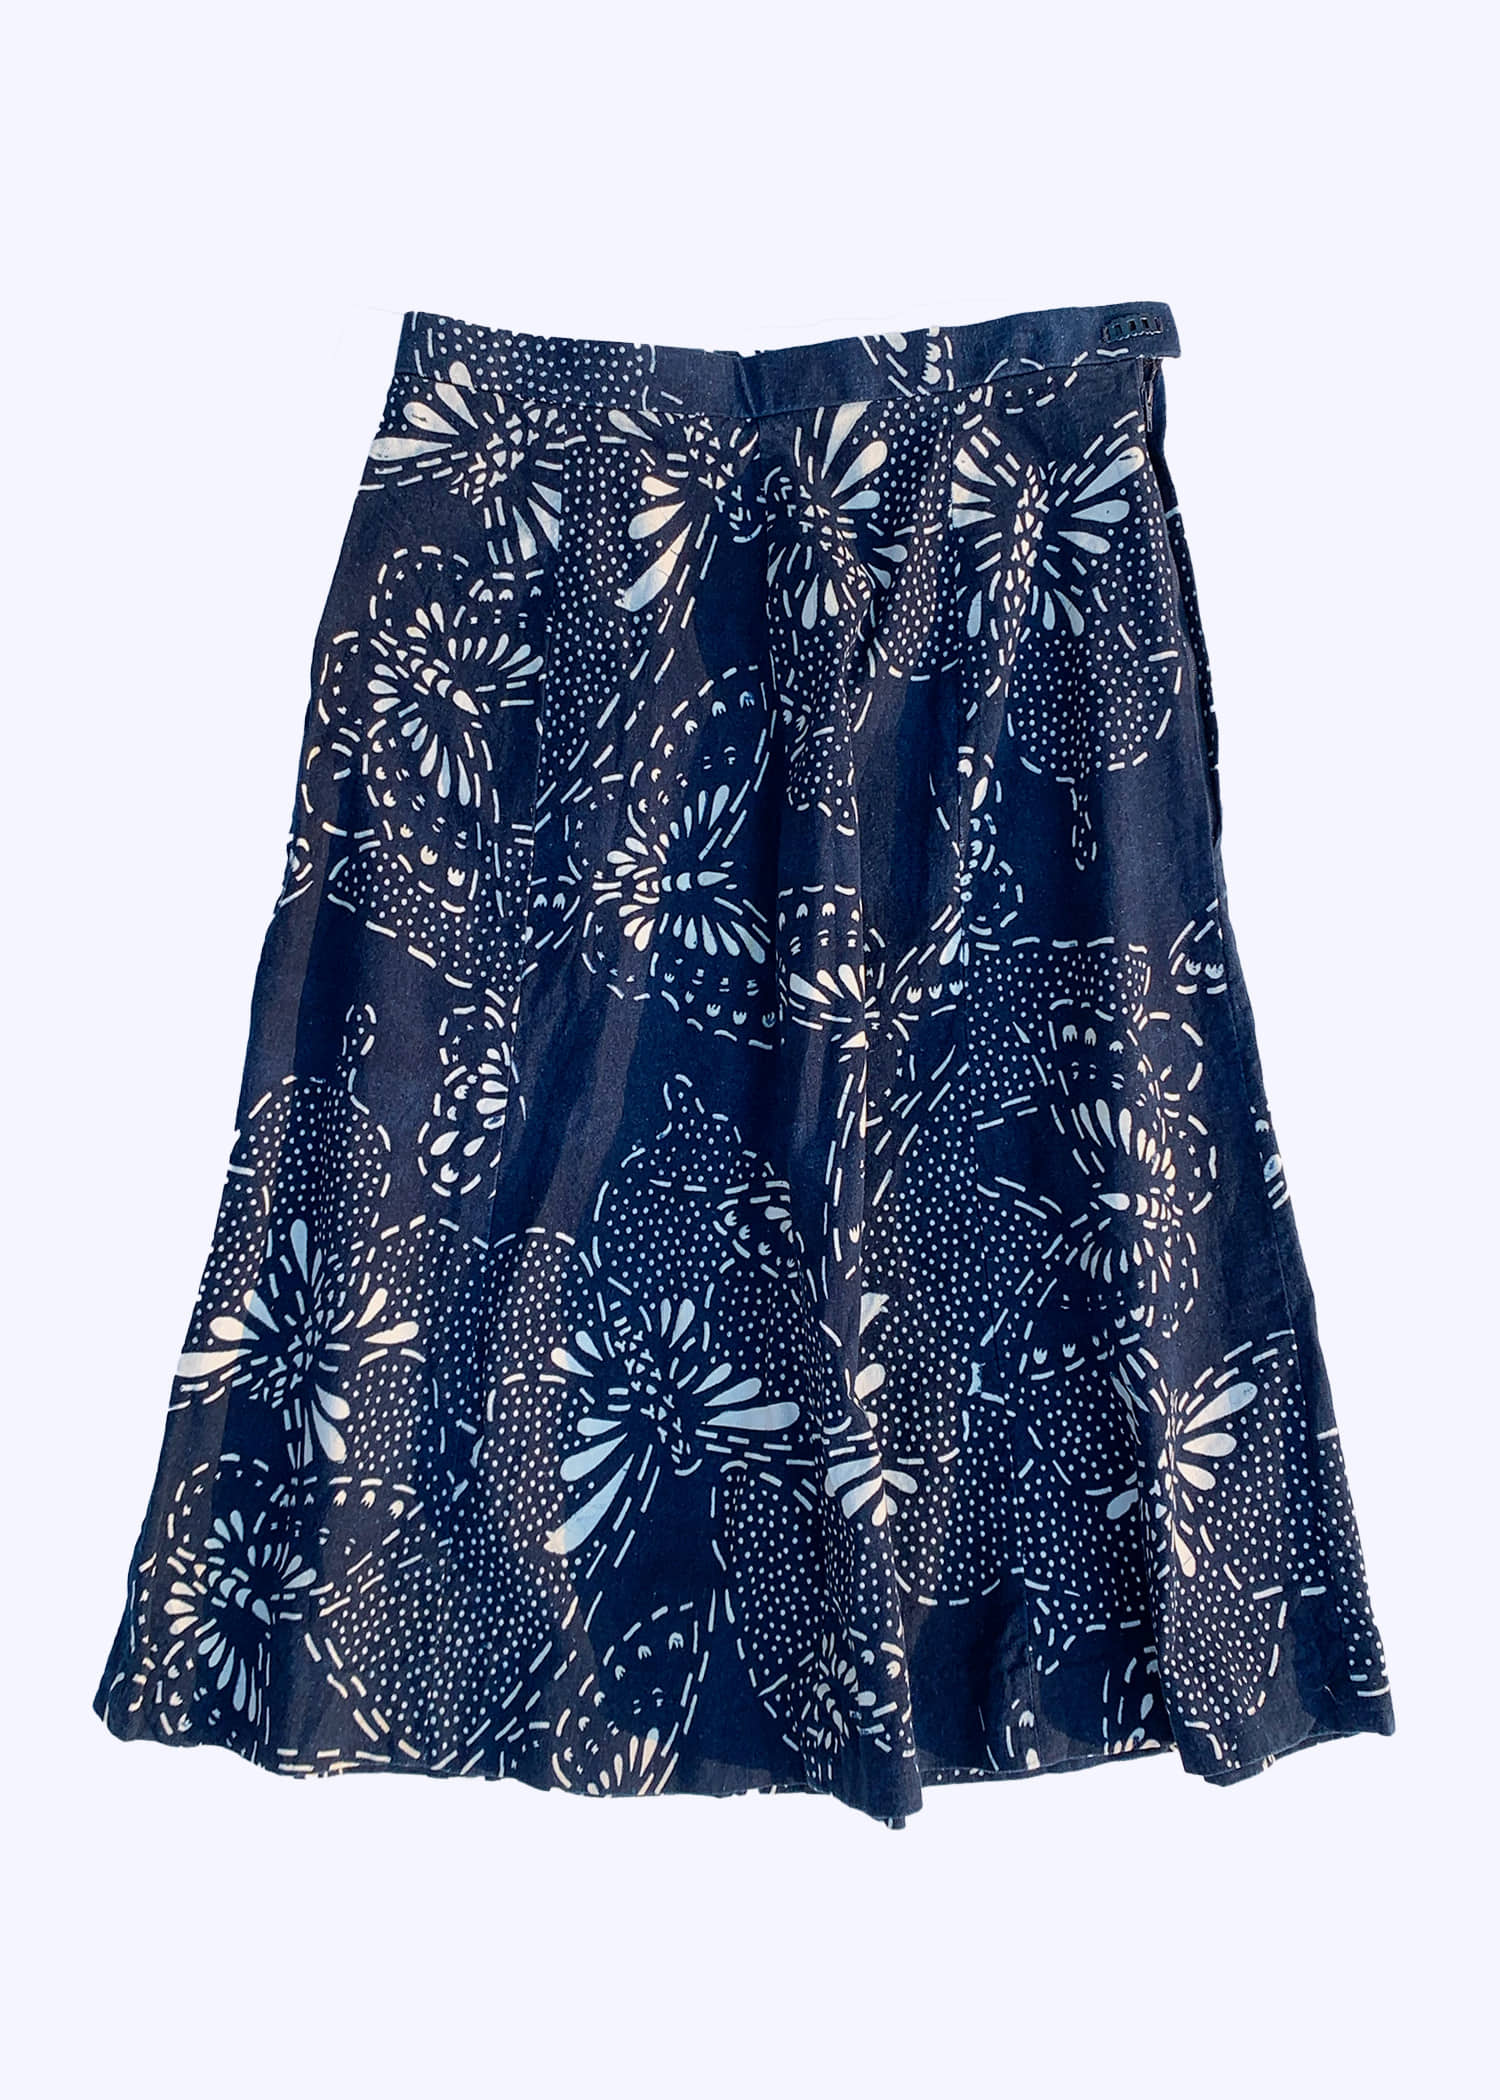 select vintage : indigo skirts